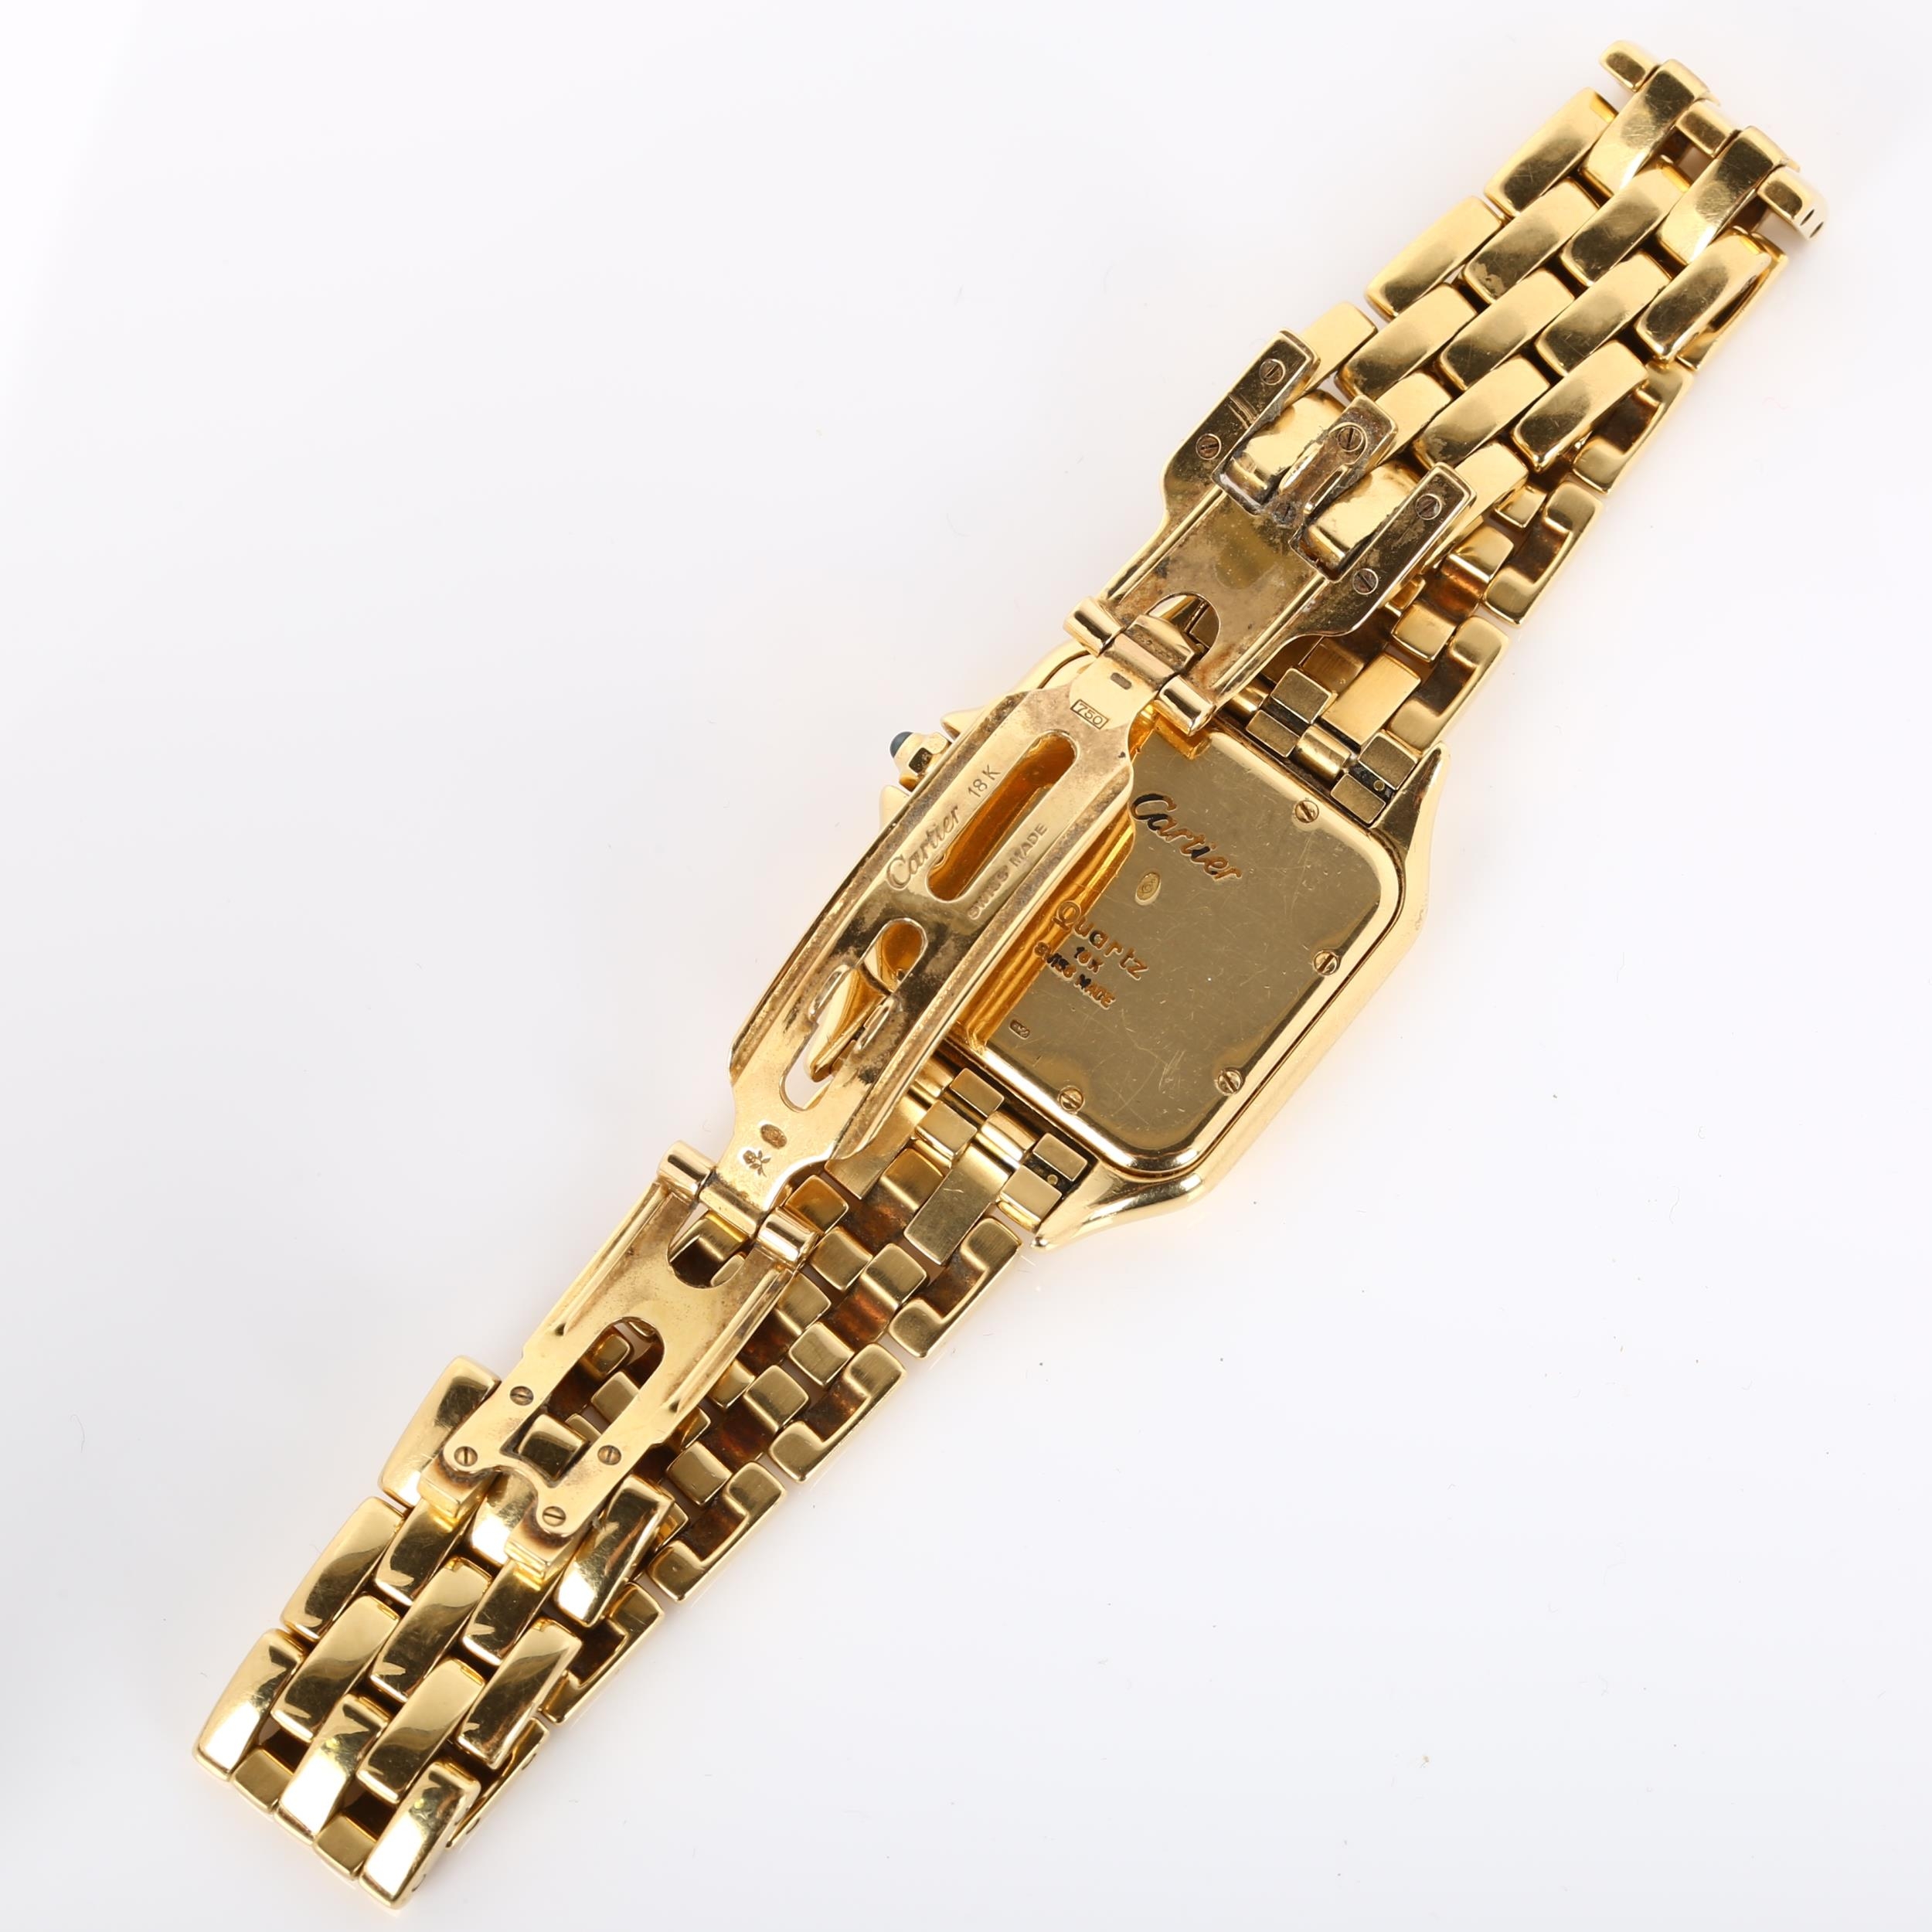 CARTIER - a mid-size 18ct gold Panthere quartz bracelet watch, ref. 8839, circa 1990s, pale - Image 3 of 7